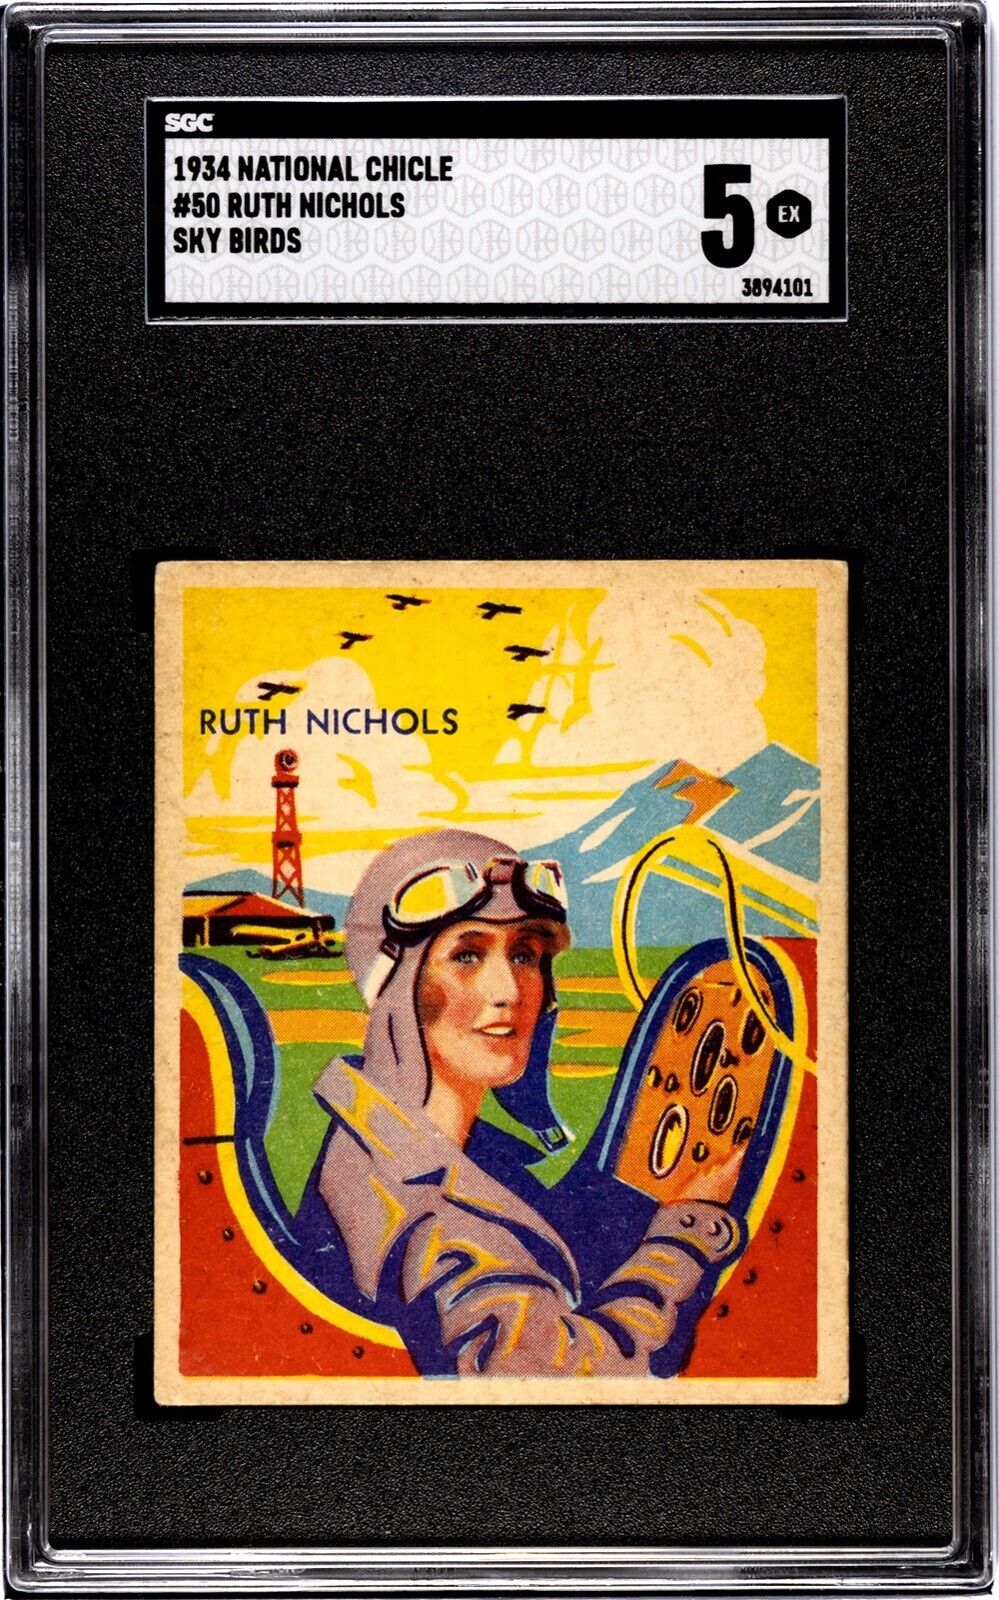 1934 R136 National Chicle Sky Birds #50: RUTH NICHOLS Female Pioneer ~ SGC 5